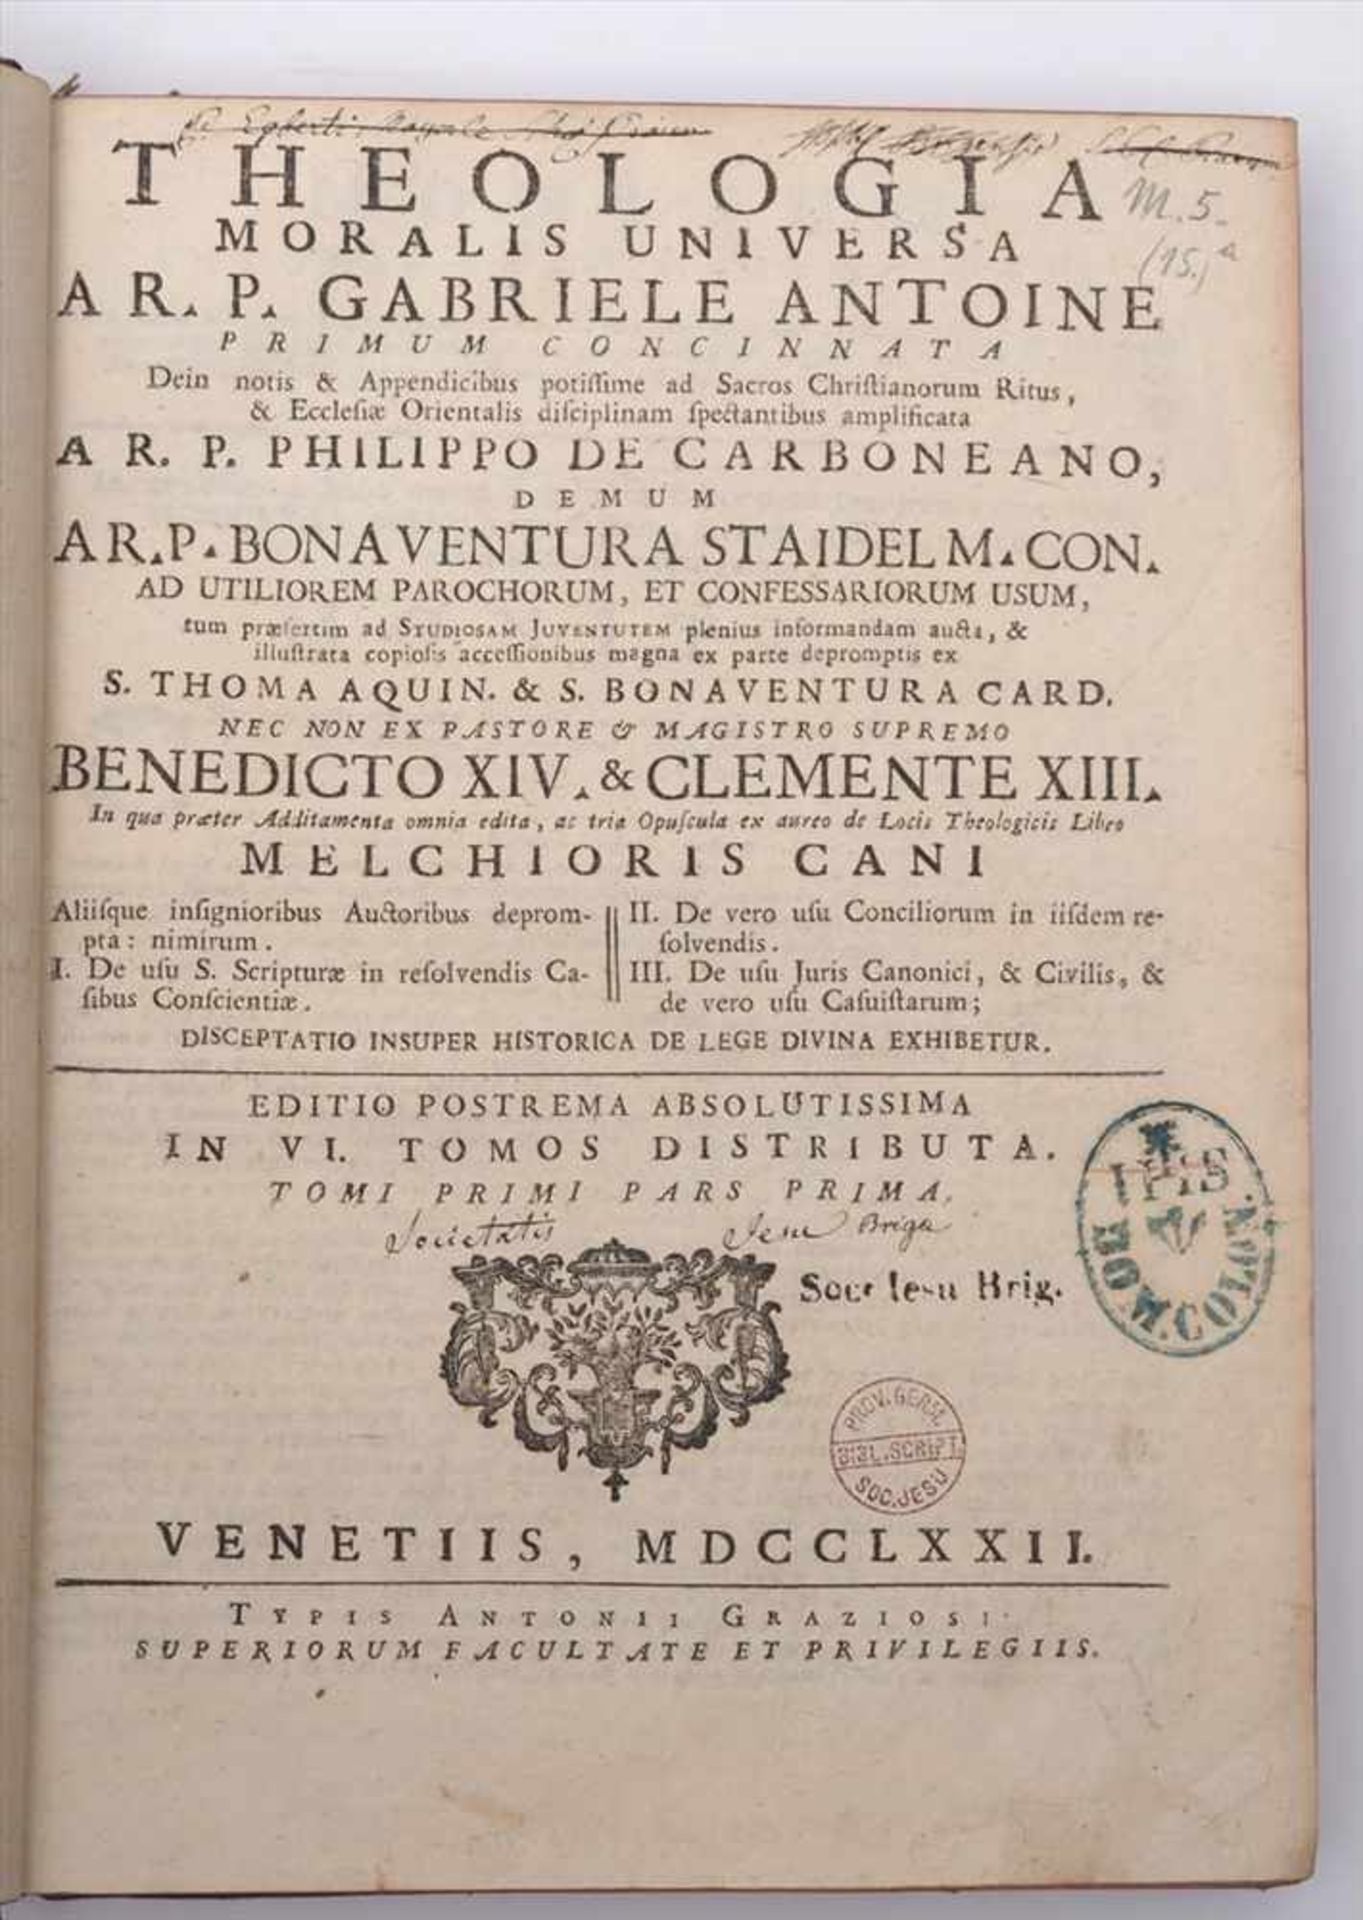 Antoine, Gabriele: Theologia moralis universaVenedig, 1772, drei Teile in einem Band. Ledereinband - Bild 4 aus 6